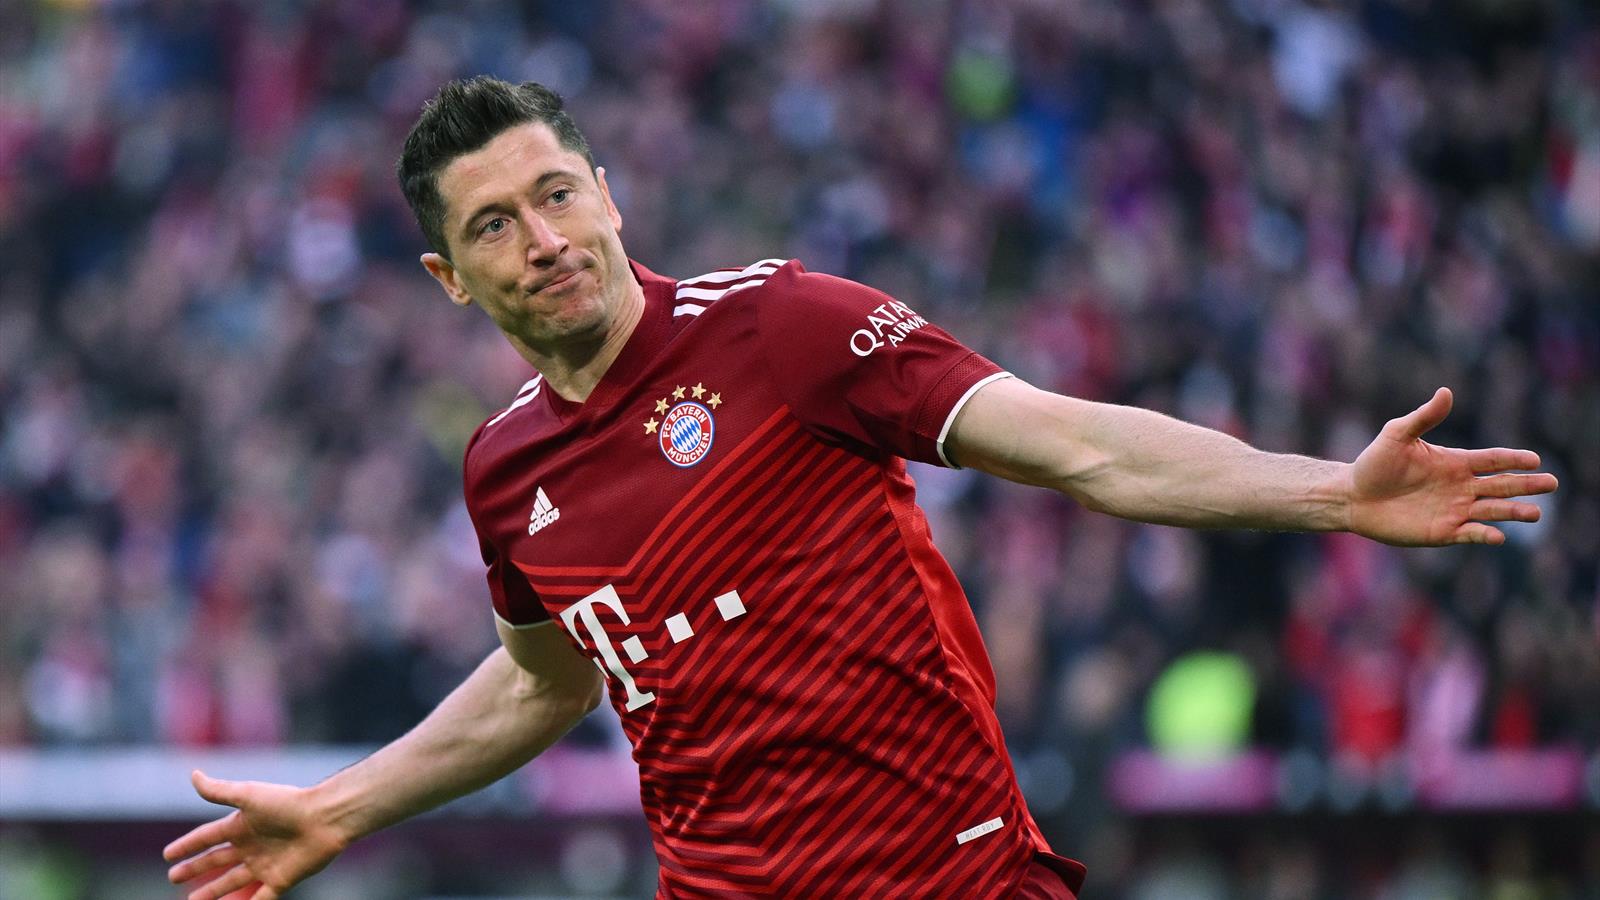 Manchester United is planning a surprise approach for Bayern Munich's Robert Lewandowski